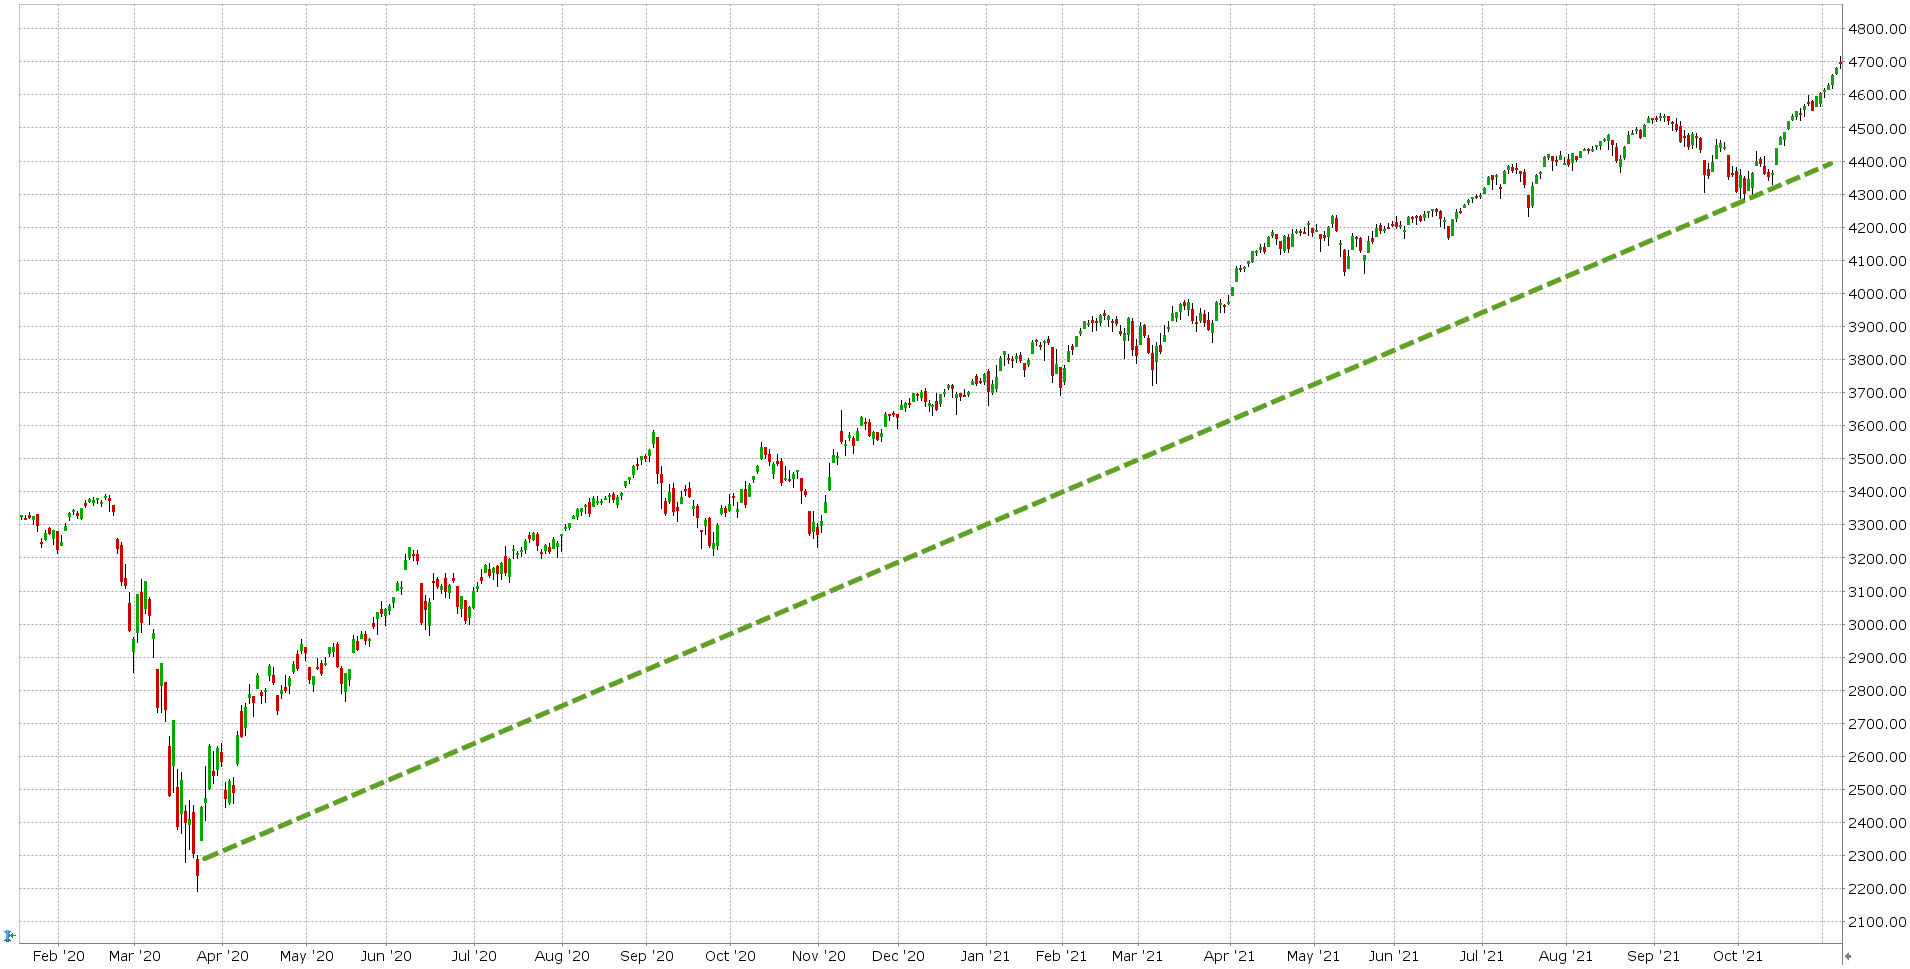 Vývoj indexu S&P 500